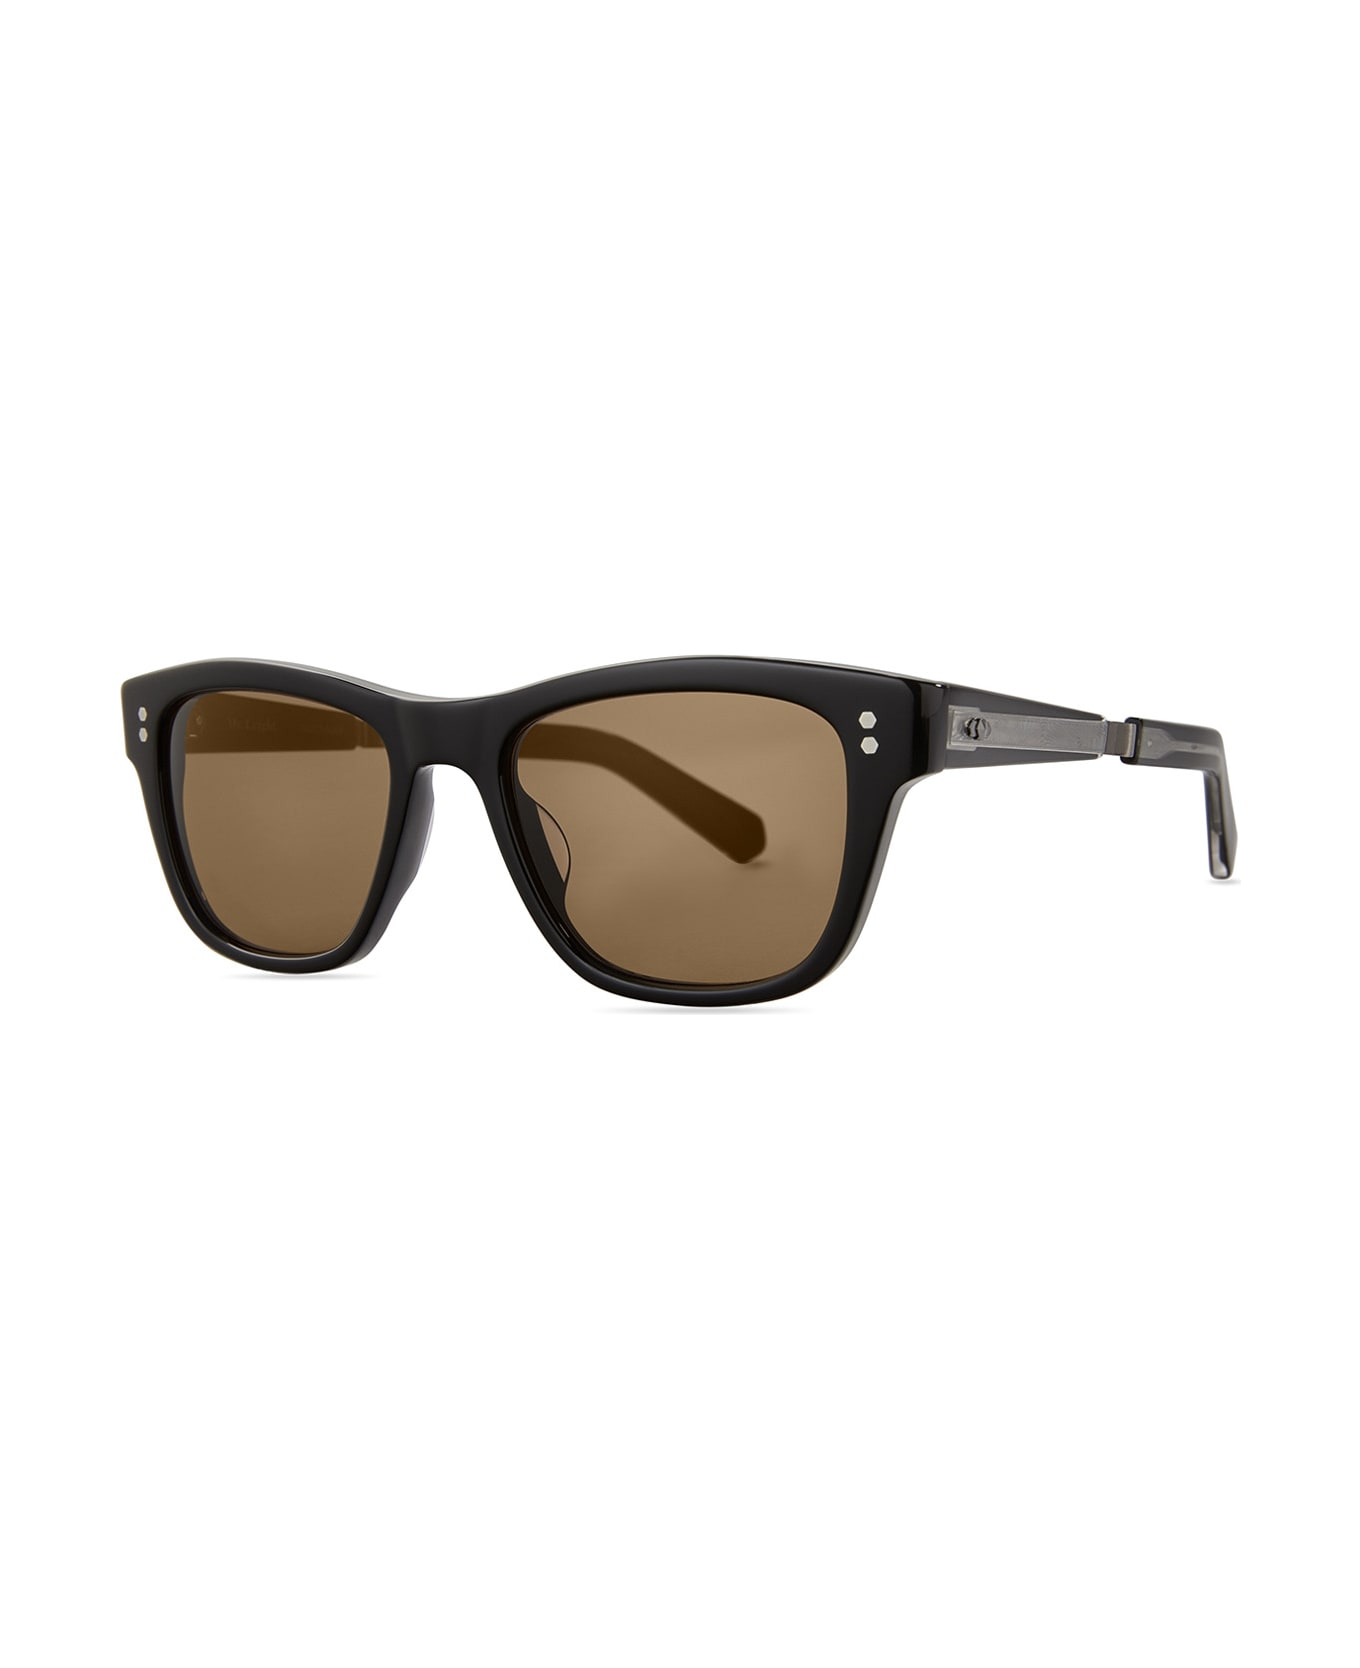 Mr. Leight Damone S Black-gunmetal/mojave Brown Polar Sunglasses - Black-Gunmetal/Mojave Brown Polar サングラス